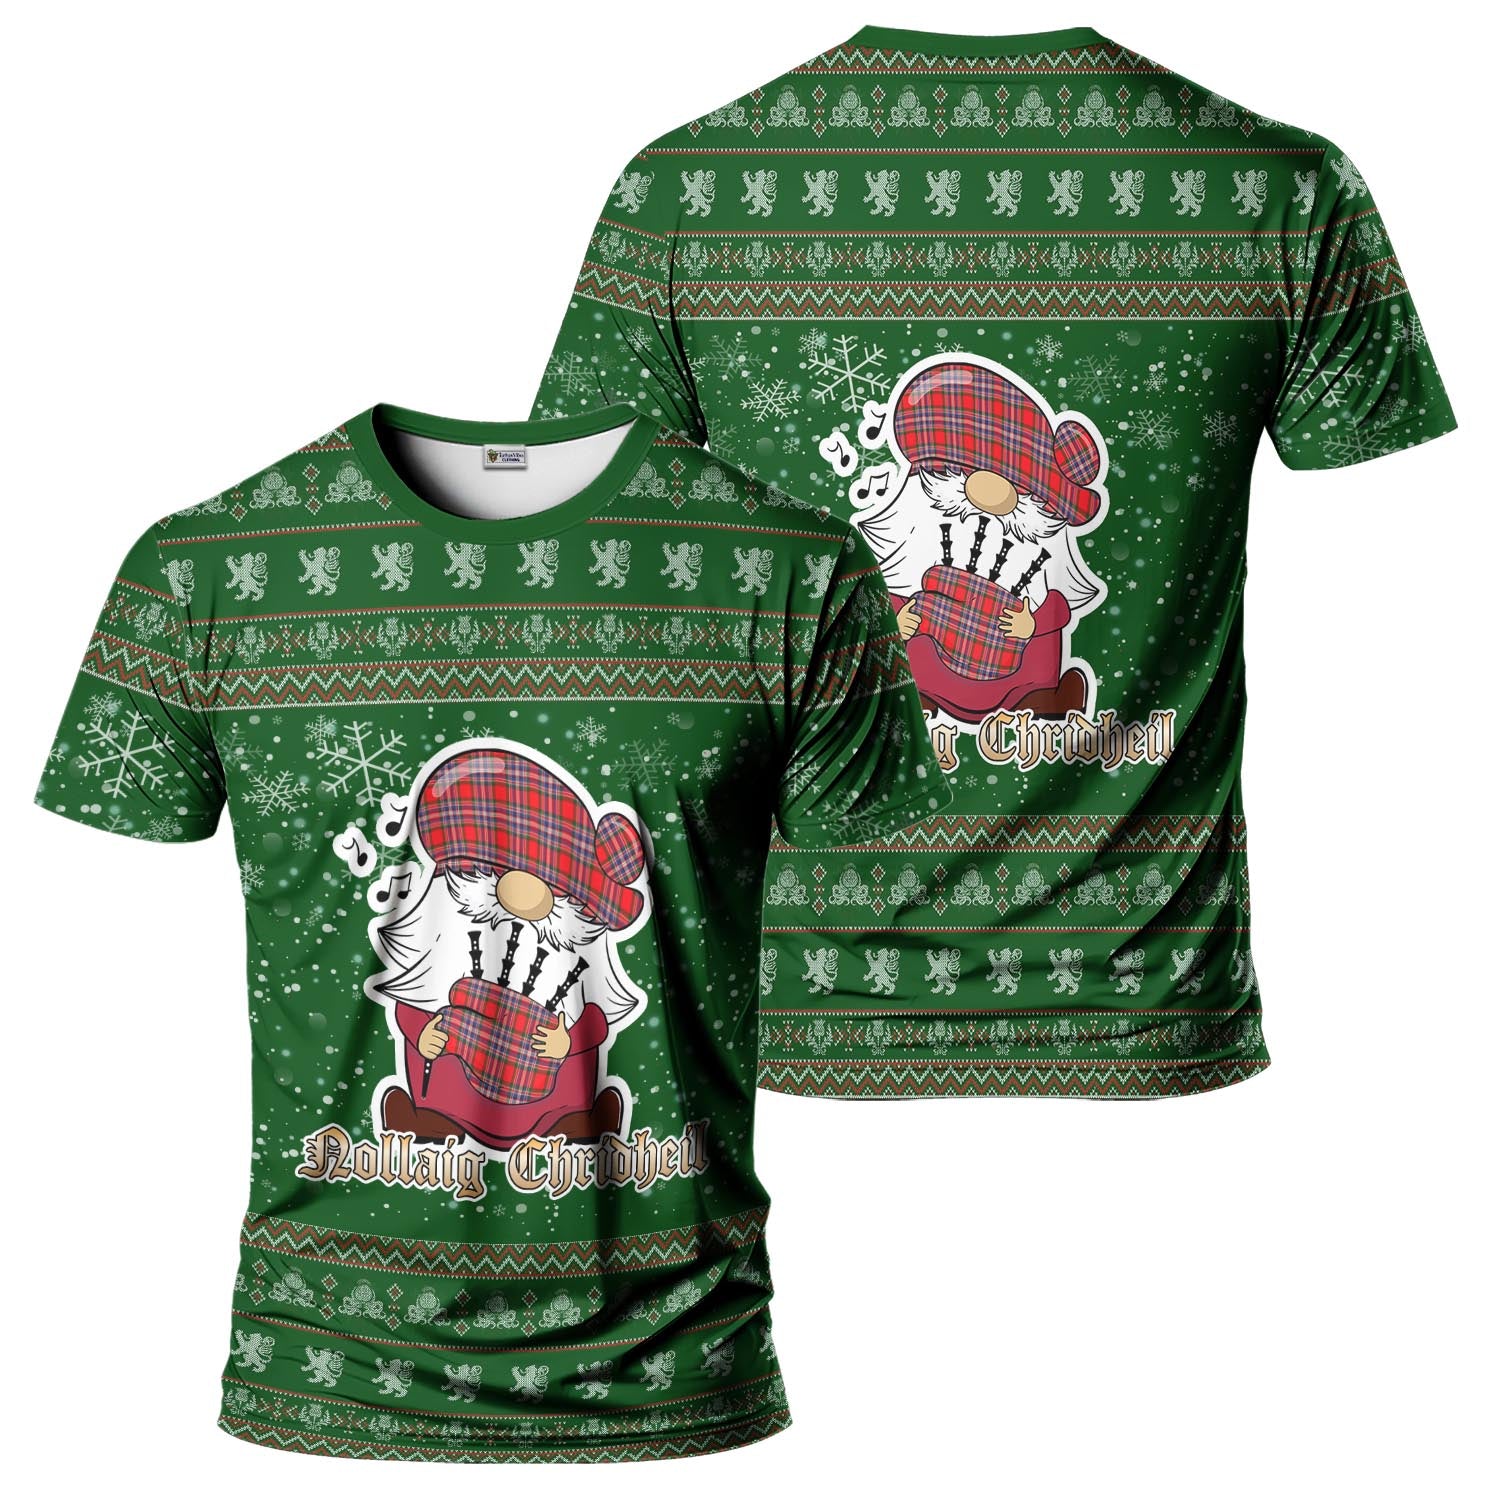 MacFarlane Modern Clan Christmas Family T-Shirt with Funny Gnome Playing Bagpipes Men's Shirt Green - Tartanvibesclothing